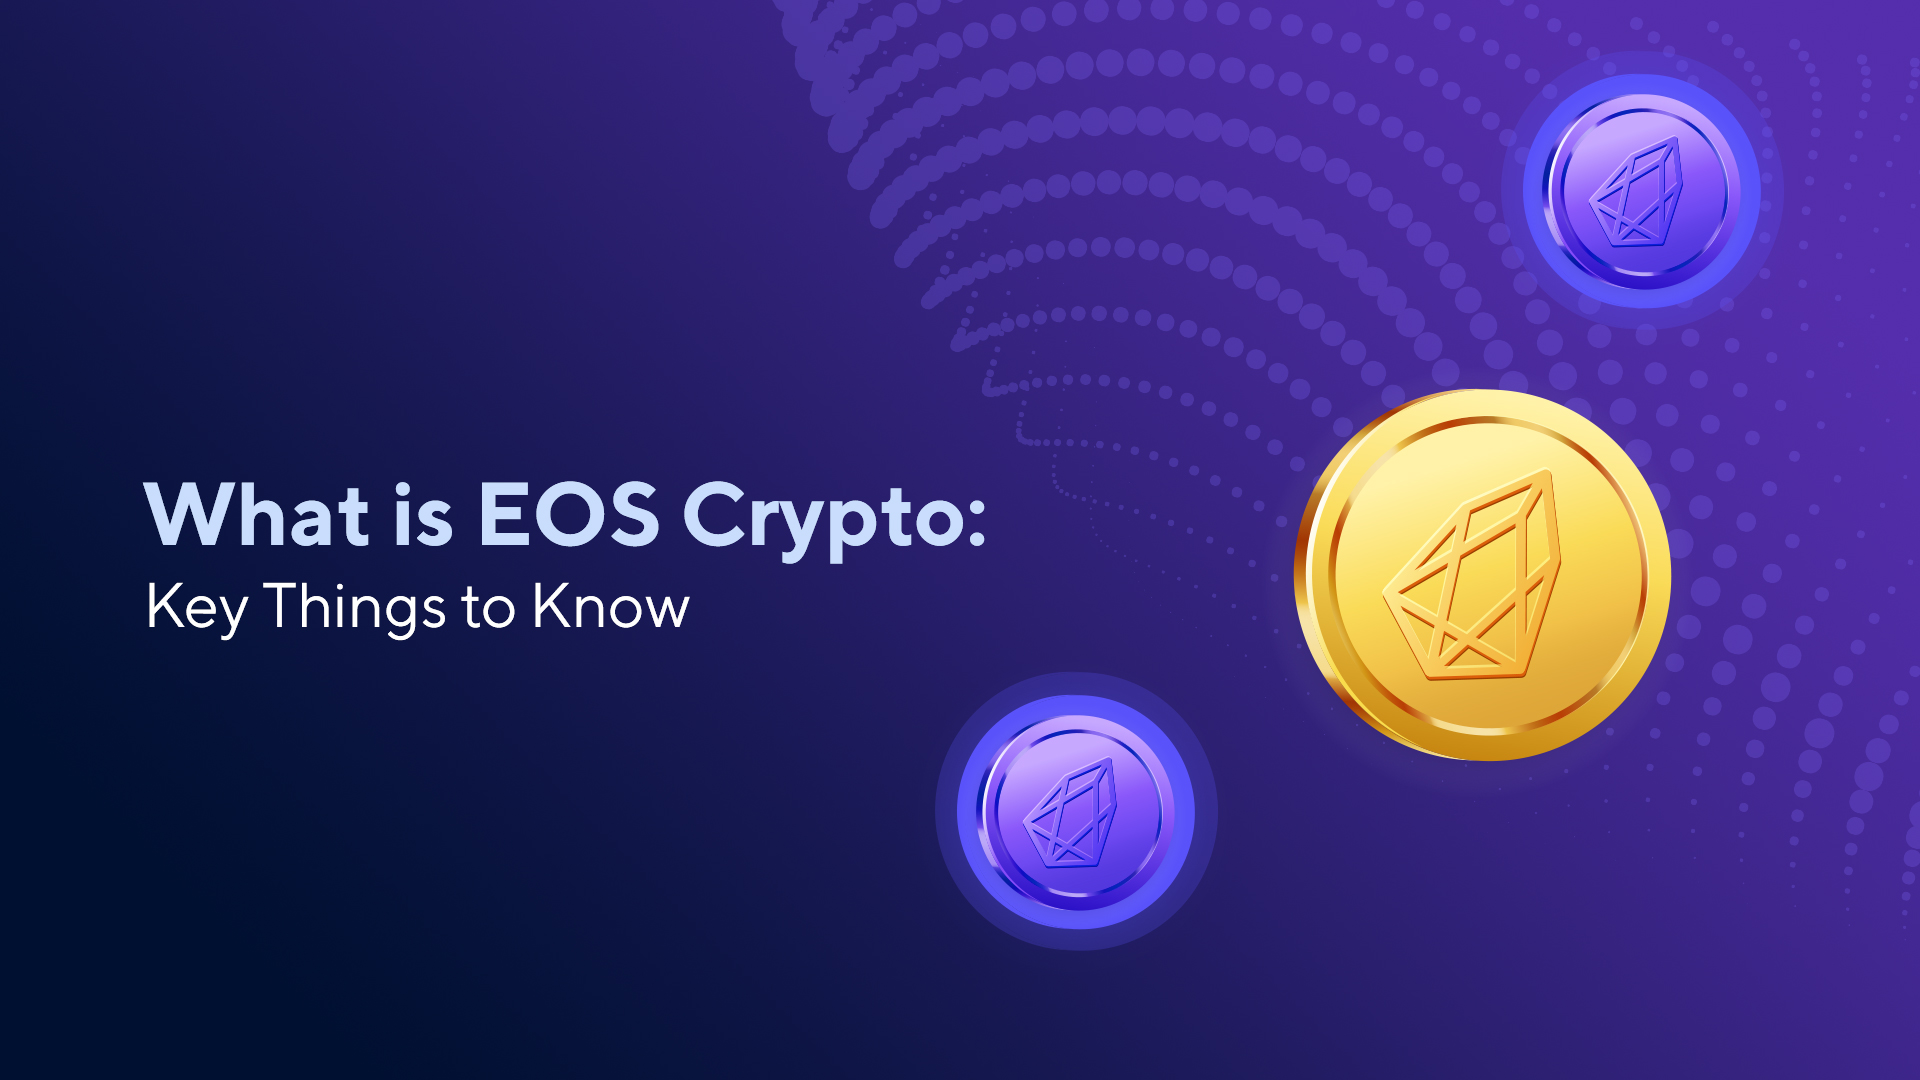 eos crypto release